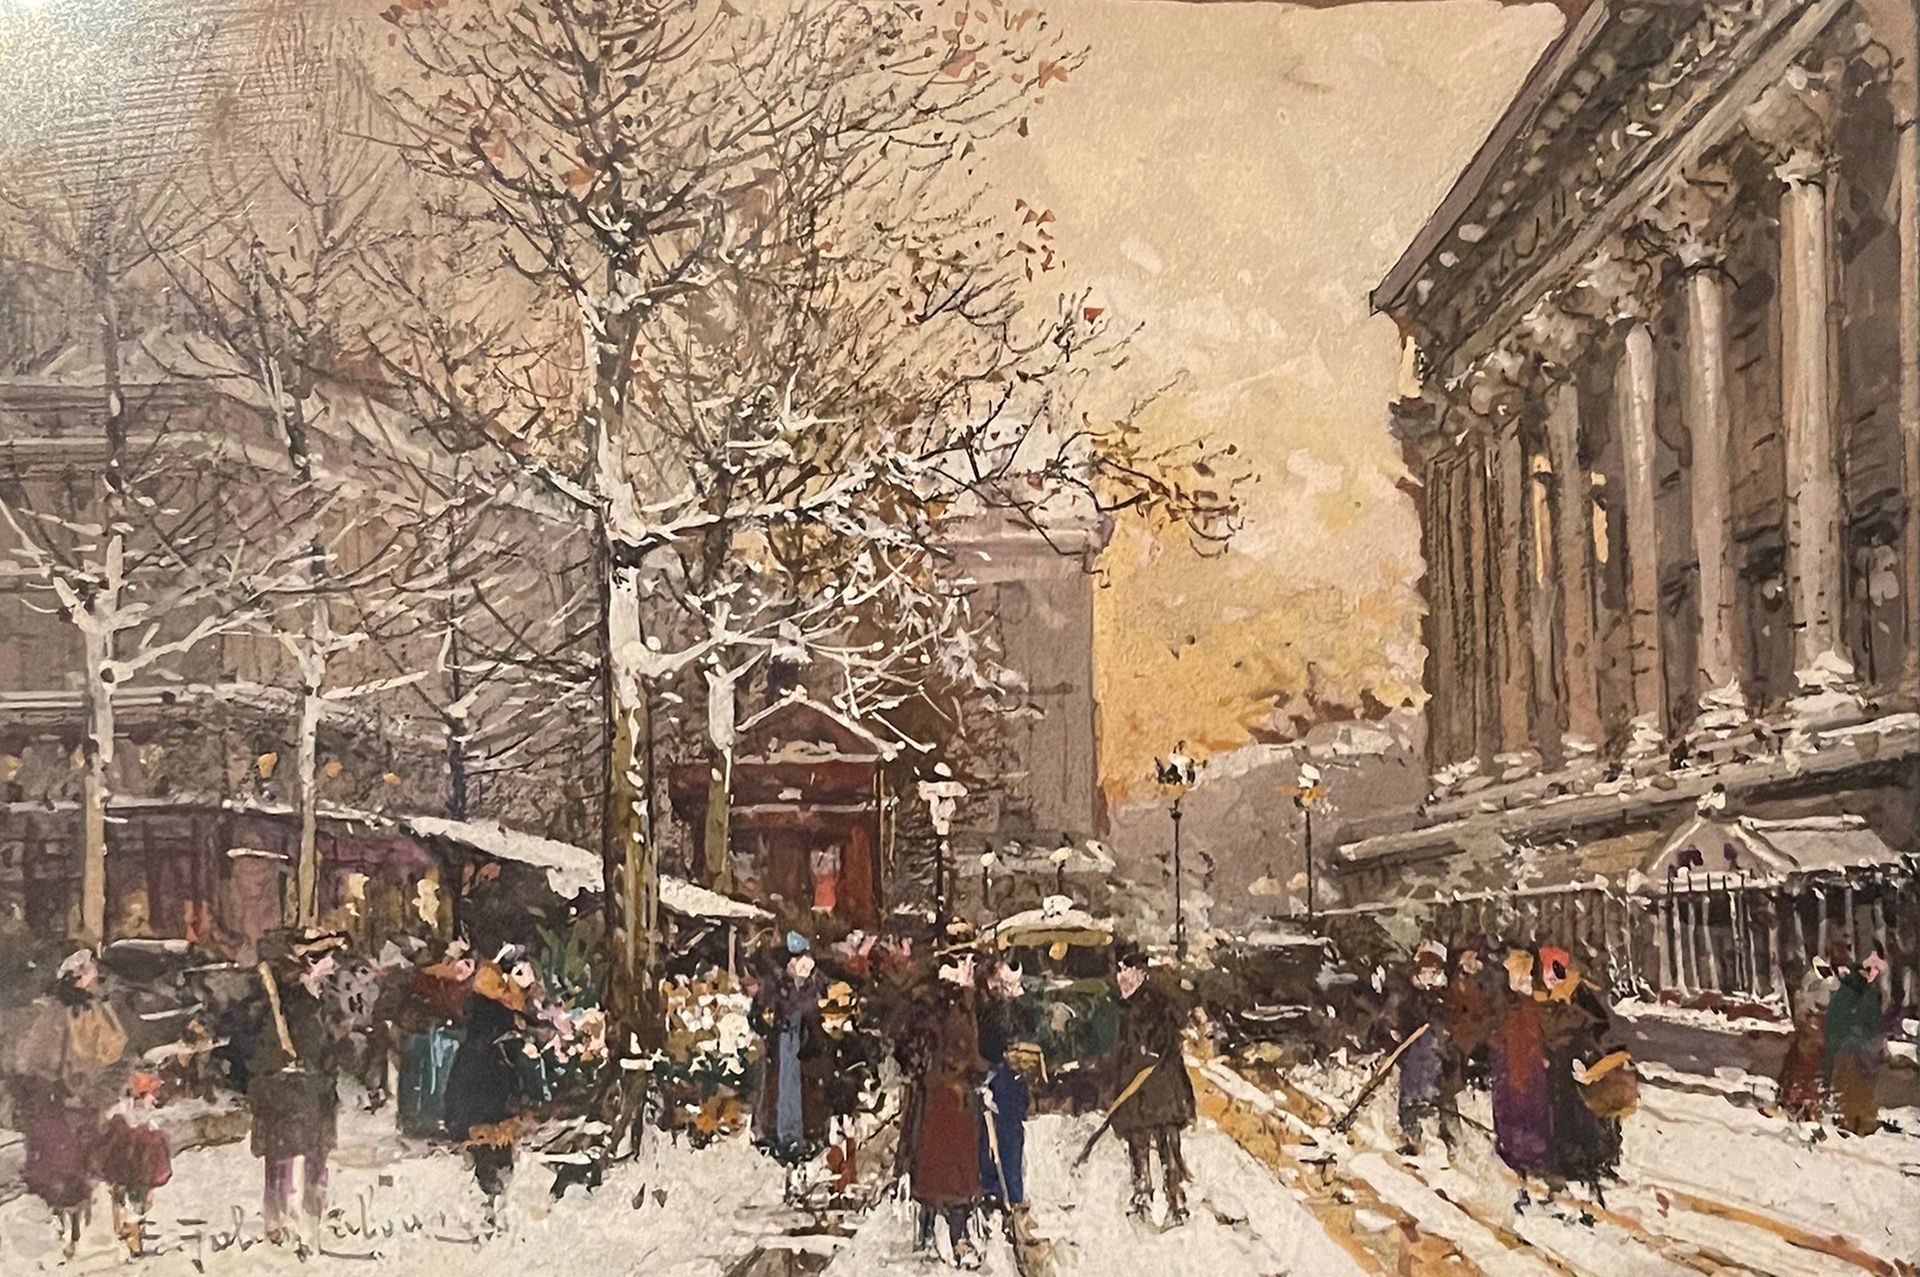 Eugène GALIEN-LALOUE 1854-1941 花市，雪中的玛德莱娜广场
水粉画，左下方有签名
10.8 x 17.2 厘米